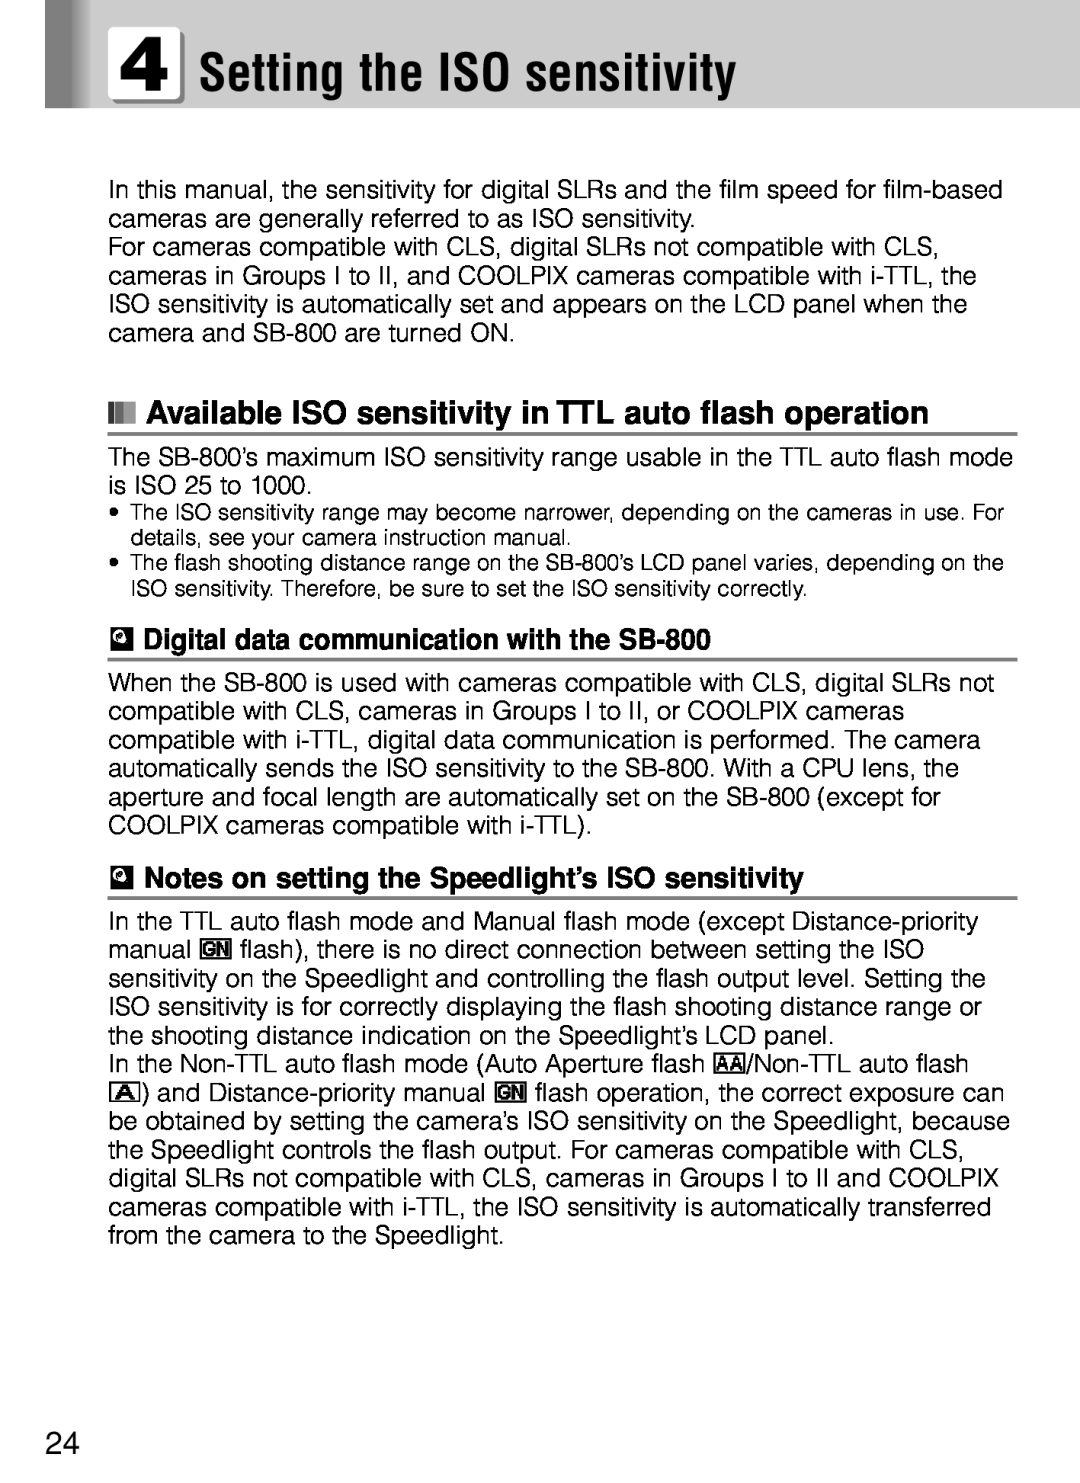 Nikon SB-800 instruction manual Setting the ISO sensitivity, Available ISO sensitivity in TTL auto flash operation 